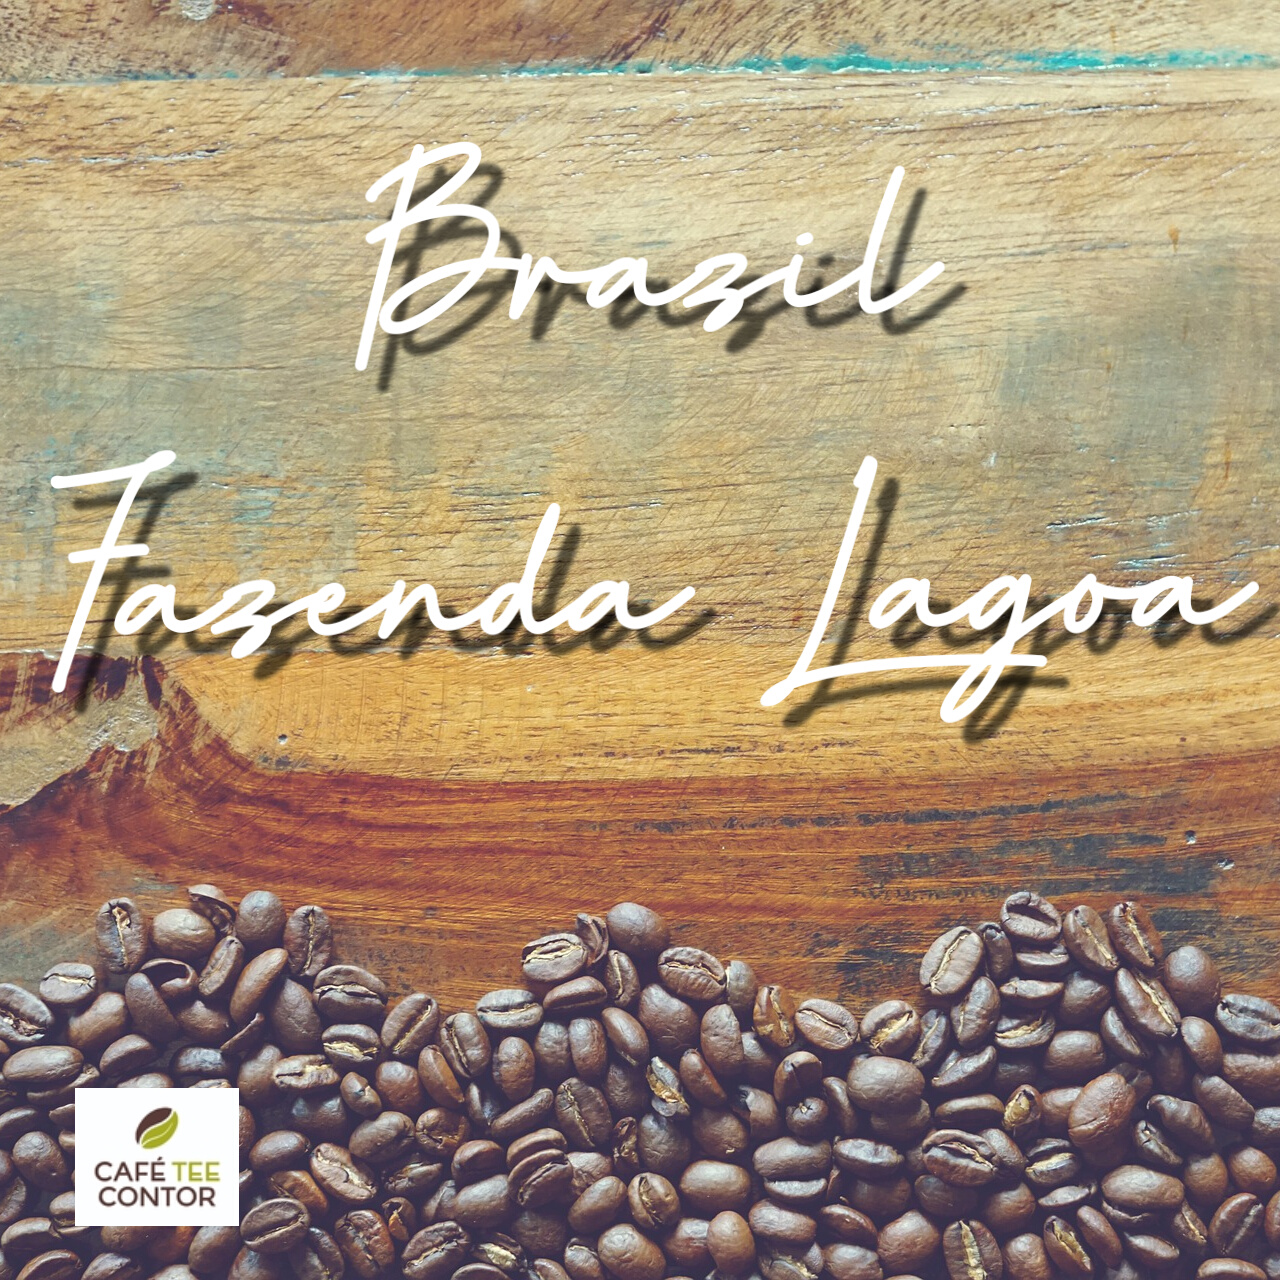 Kaffee Brazil Fazenda Lagoa